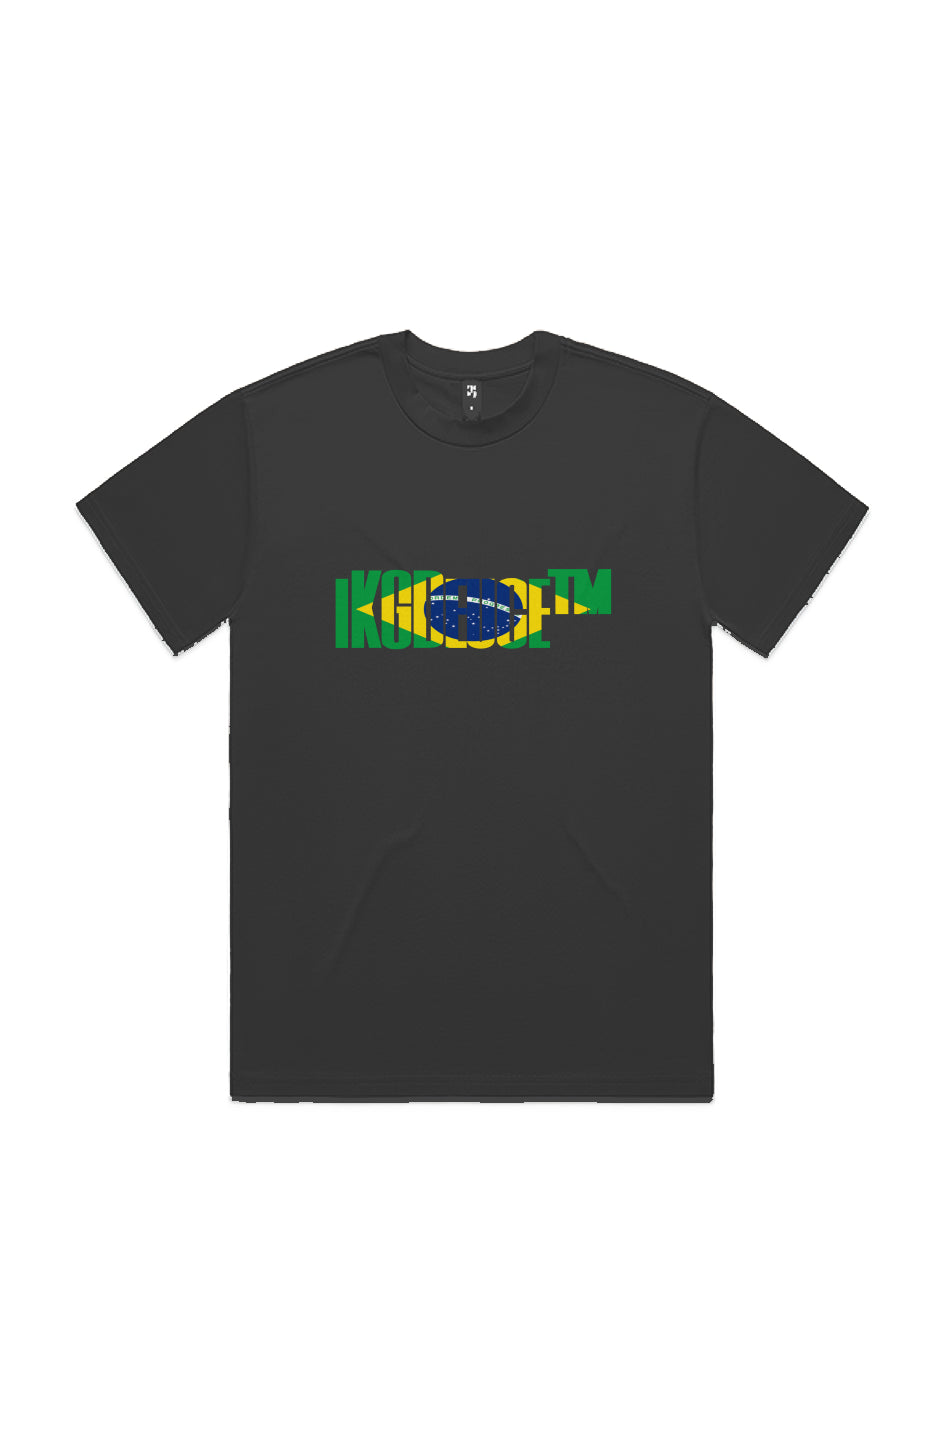 Brazil (T-Shirt) Black